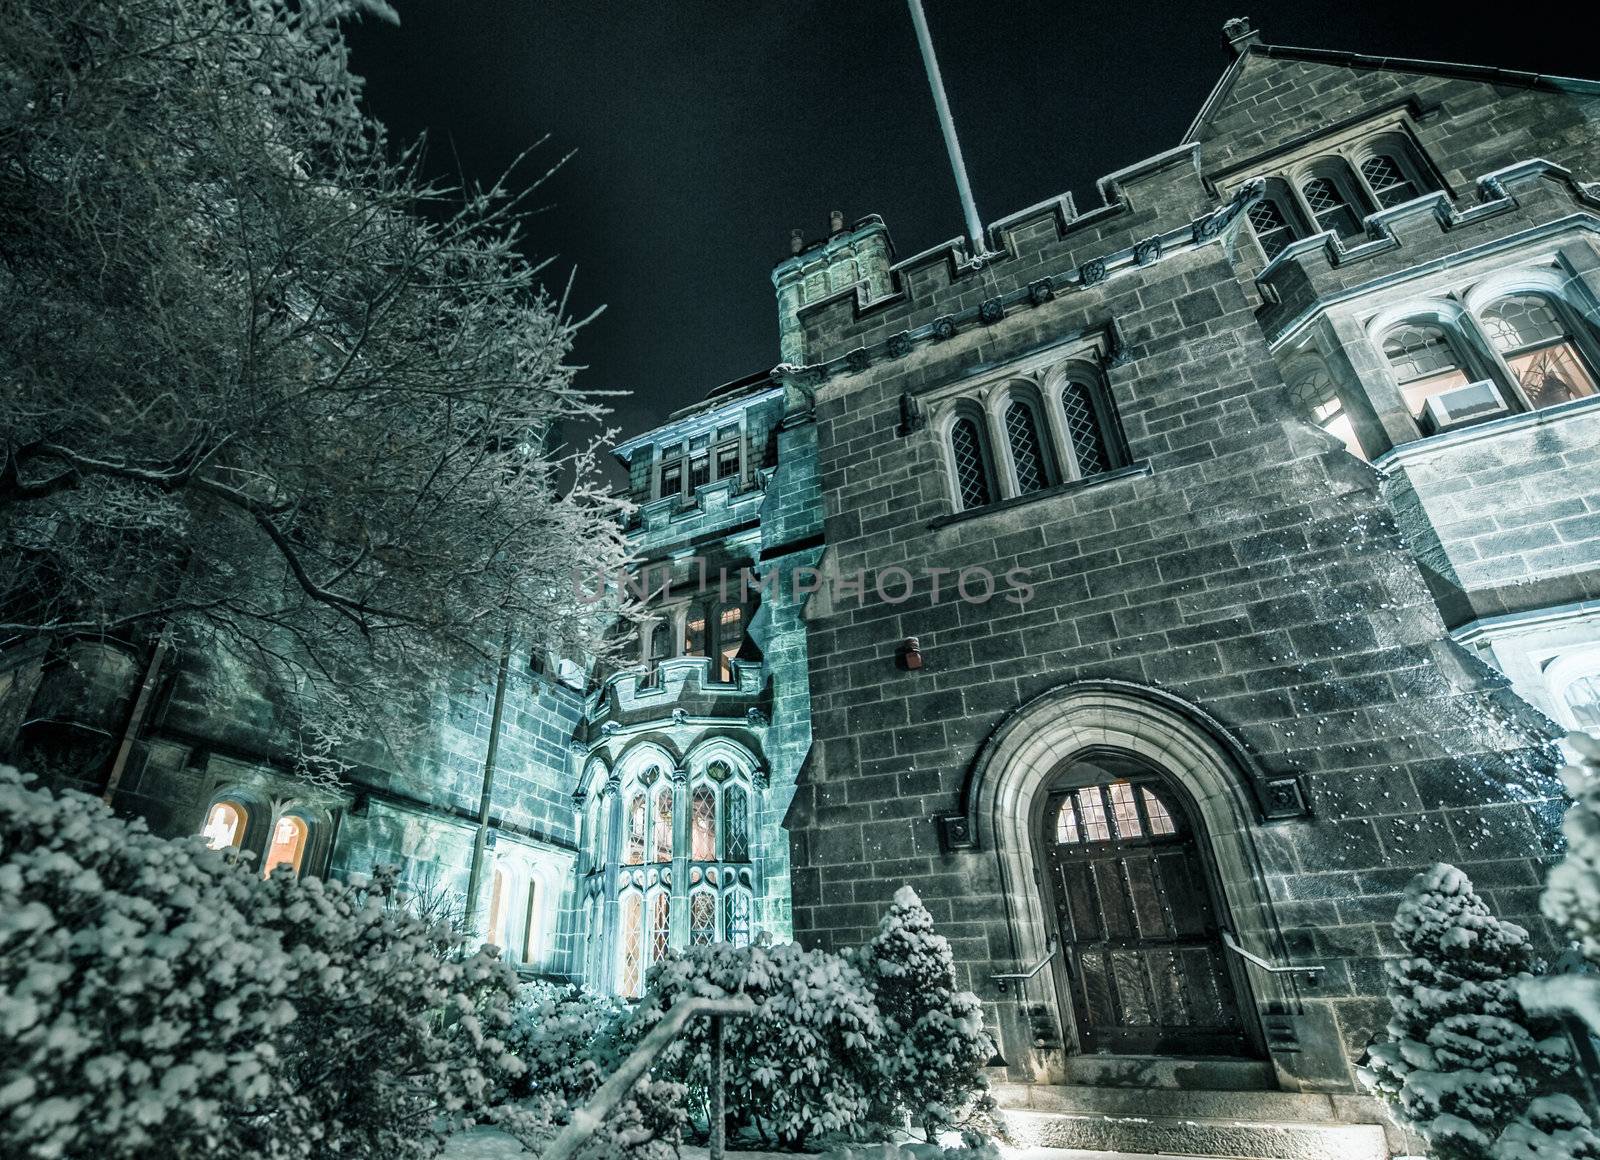 Boston University's Tudor Revival mansion The Castle